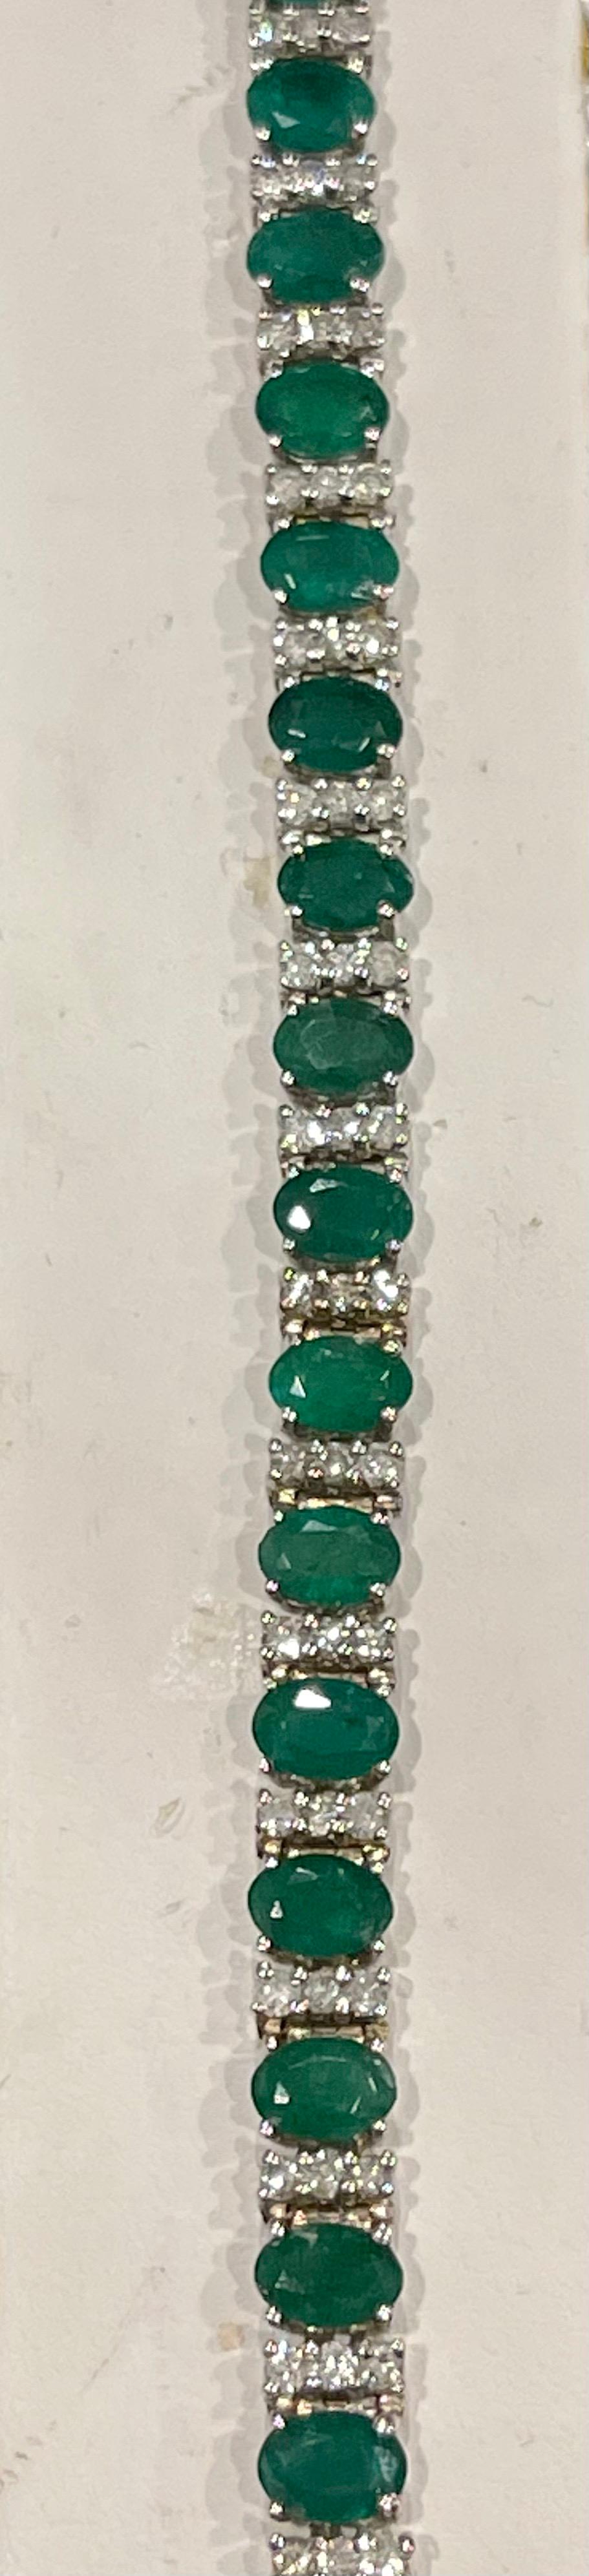 18 carat Natural Emerald & Diamond Cocktail Tennis Bracelet 14 Karat White Gold For Sale 11